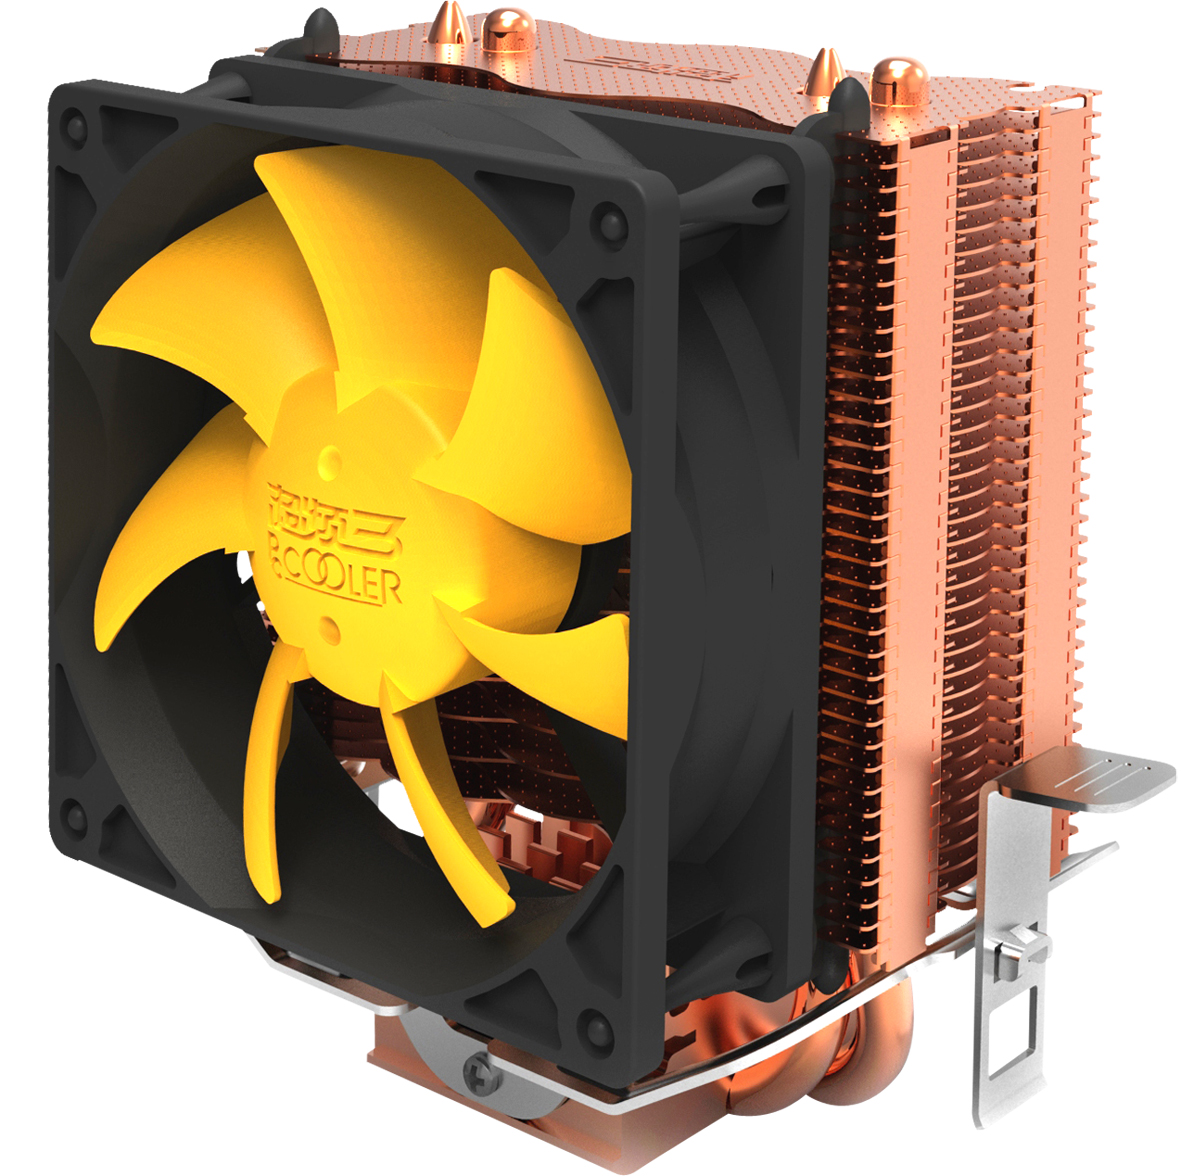 PC Cooler Yellow Ocean Mini S83 Universal CPU Cooler 80mm Silent Cooling Fan For Intel Socket LGA1155/1156/1150/745/939/AM2/AM2+/AM3/FM1/FM2